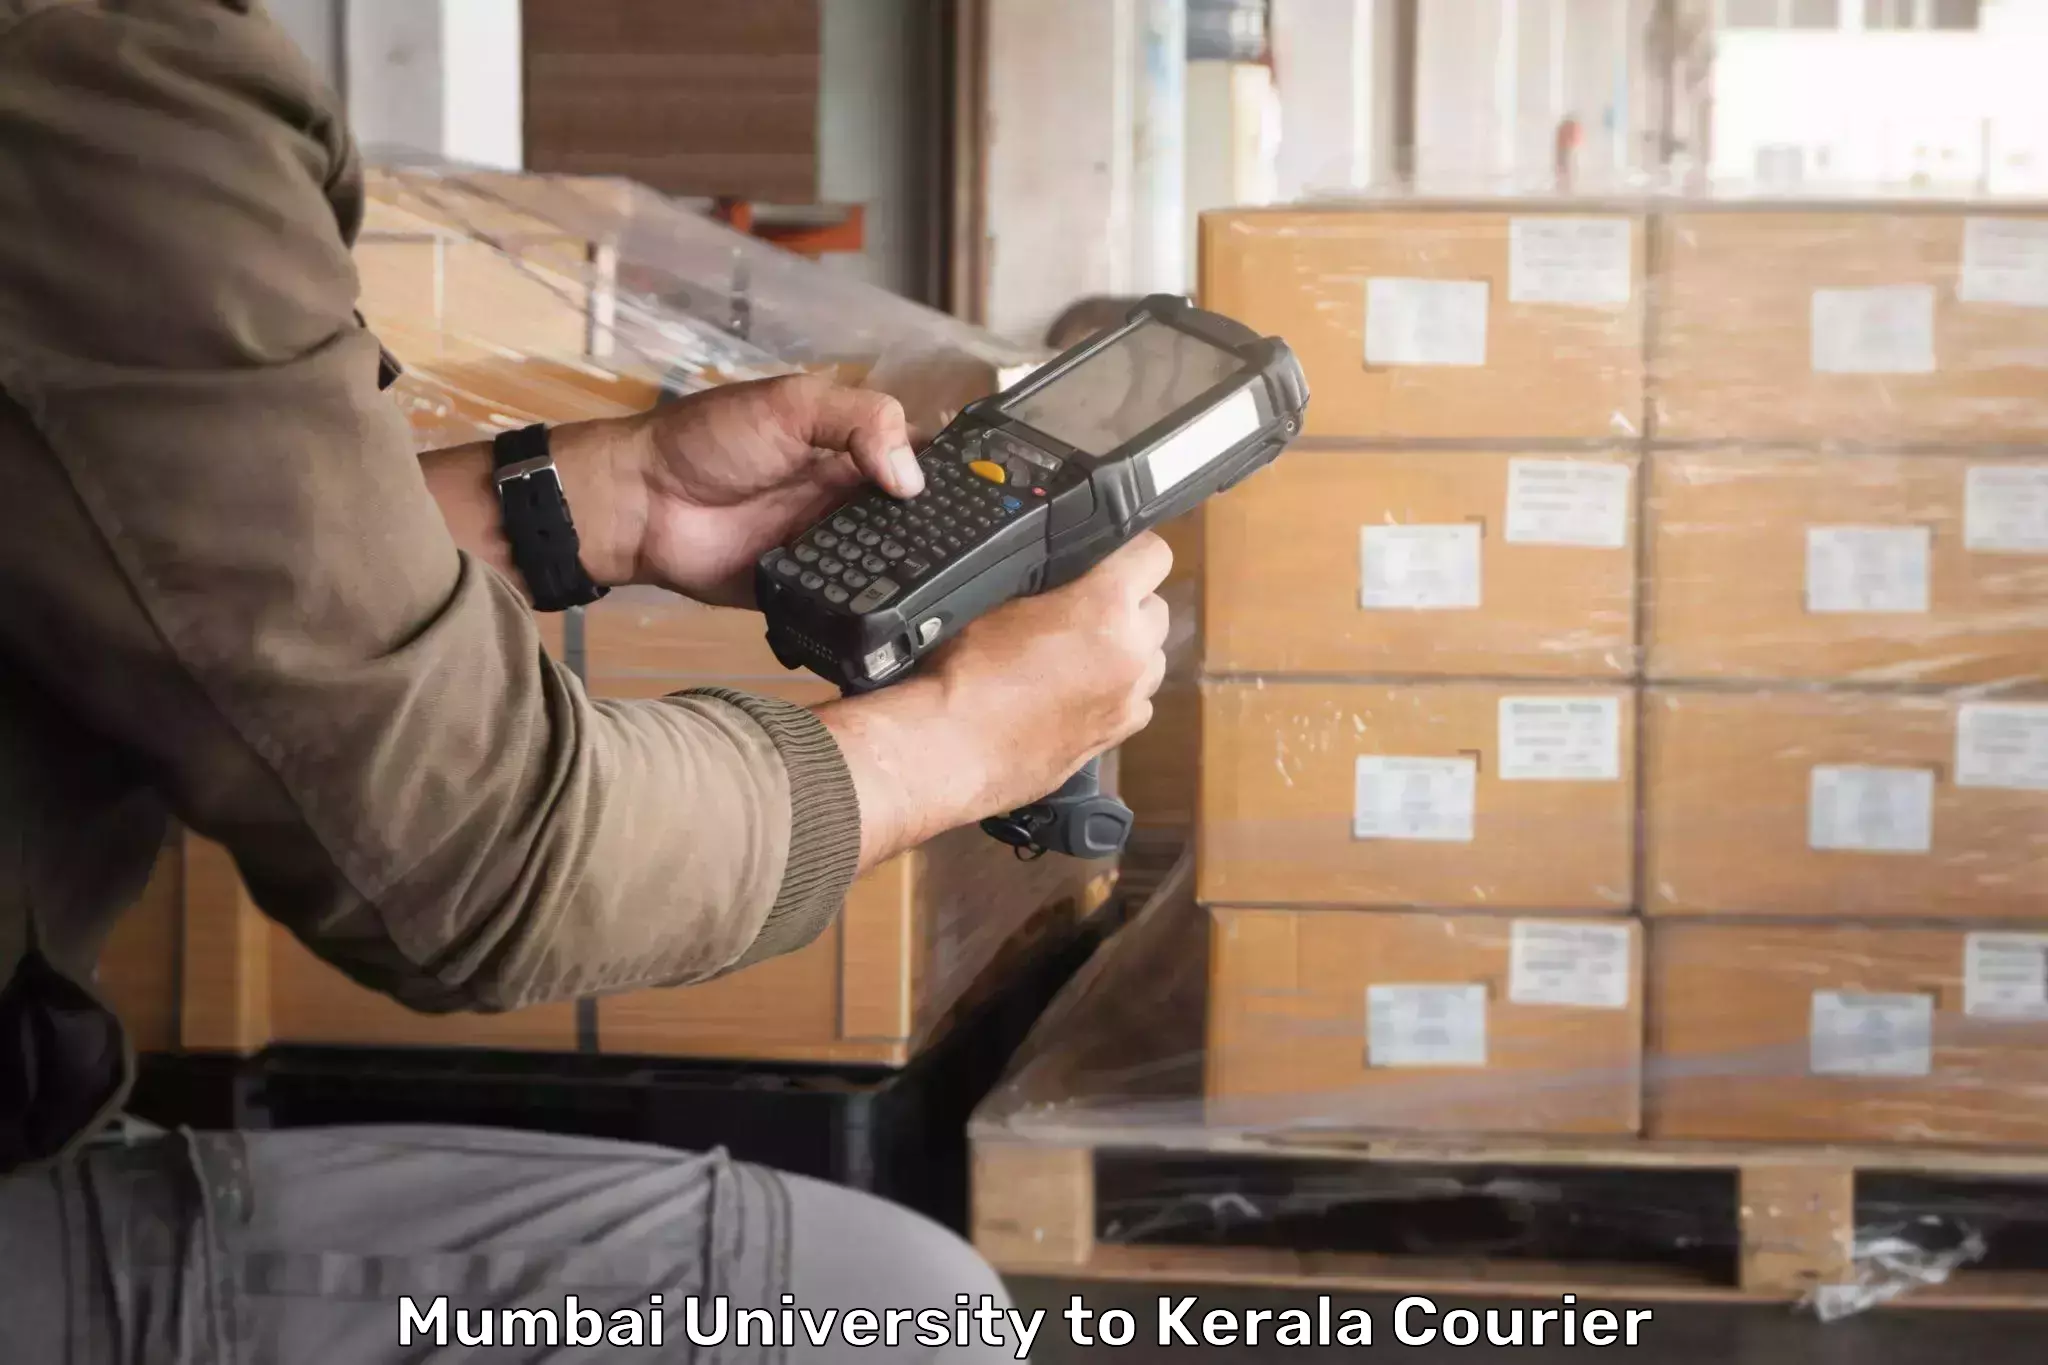 Express mail service Mumbai University to Kerala